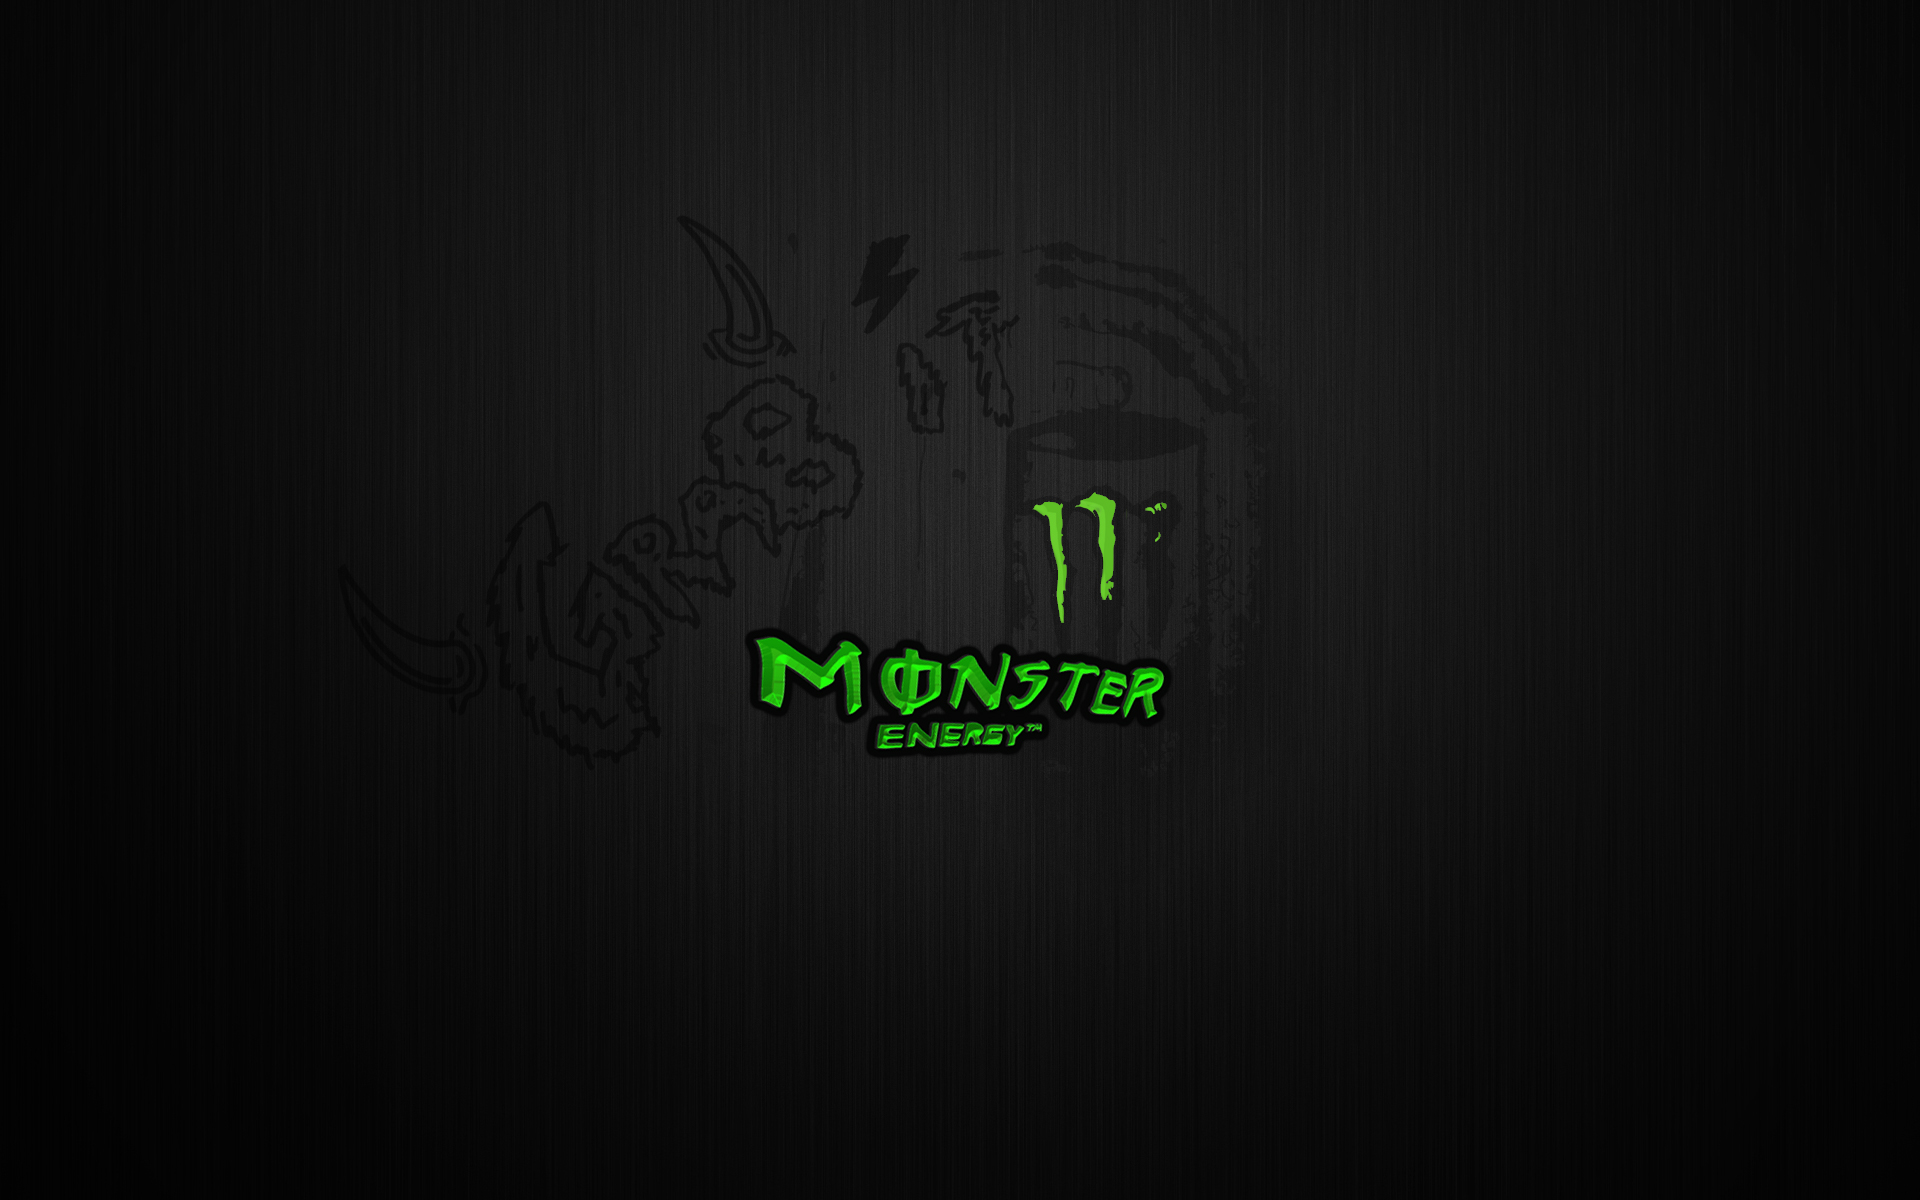 [50+] Monster Energy Wallpapers Desktop on WallpaperSafari